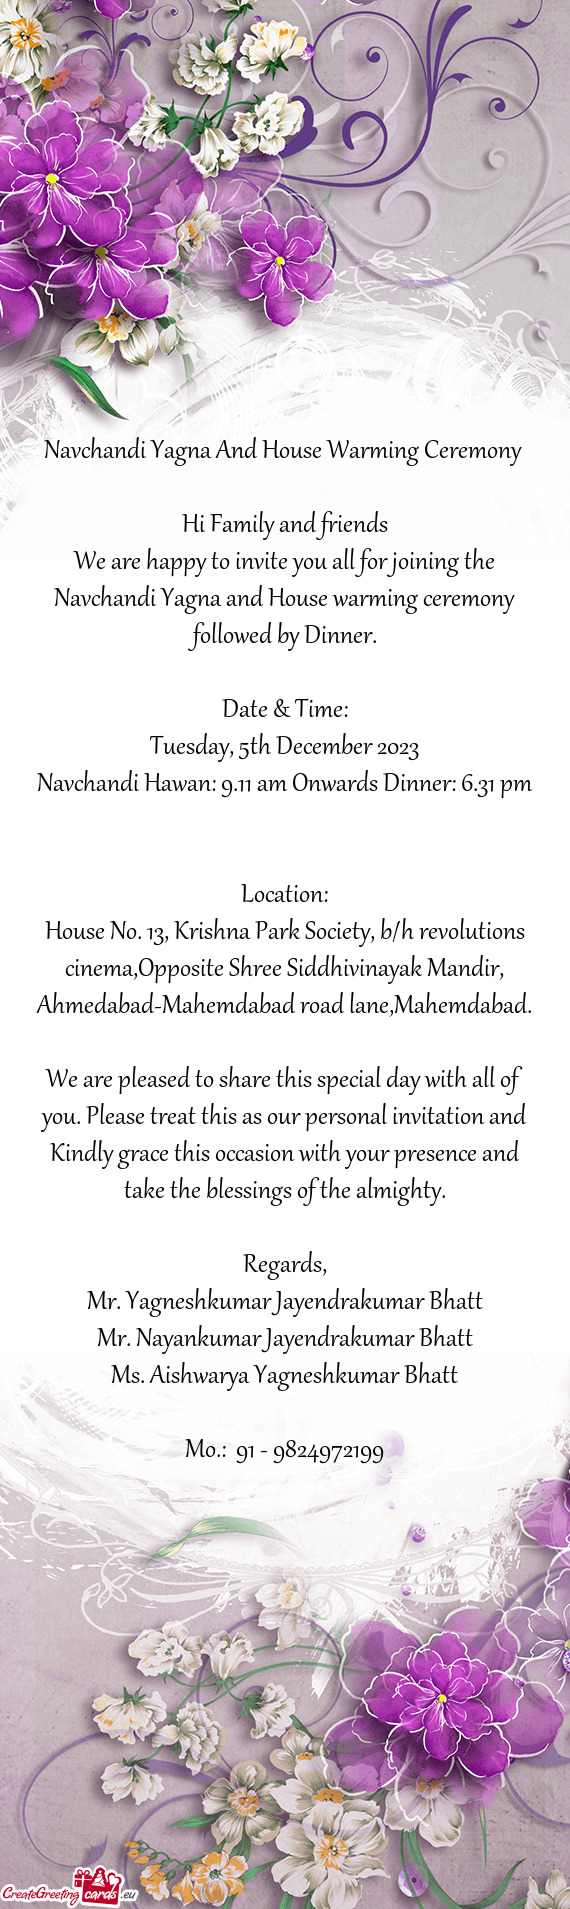 Navchandi Yagna And House Warming Ceremony